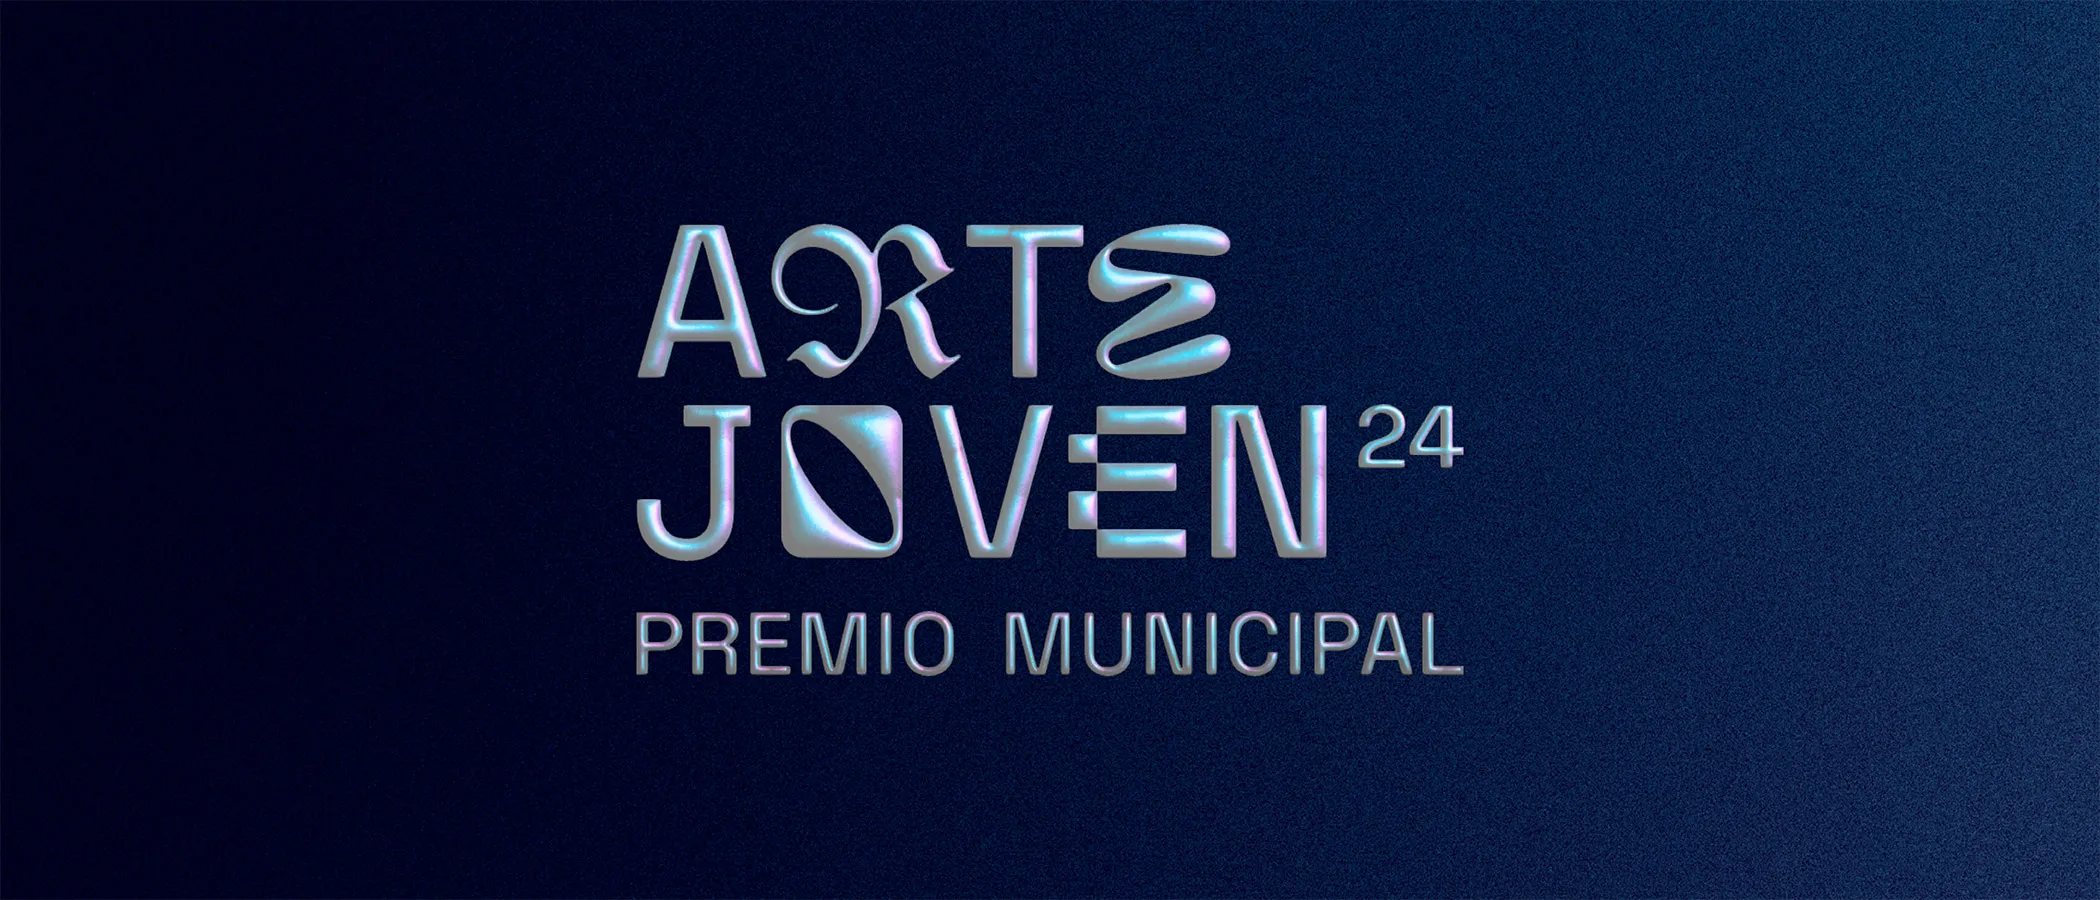 Centro Cultural La Moneda inaugura muestra con obras ganadoras del Premio Municipal Arte Joven 2024